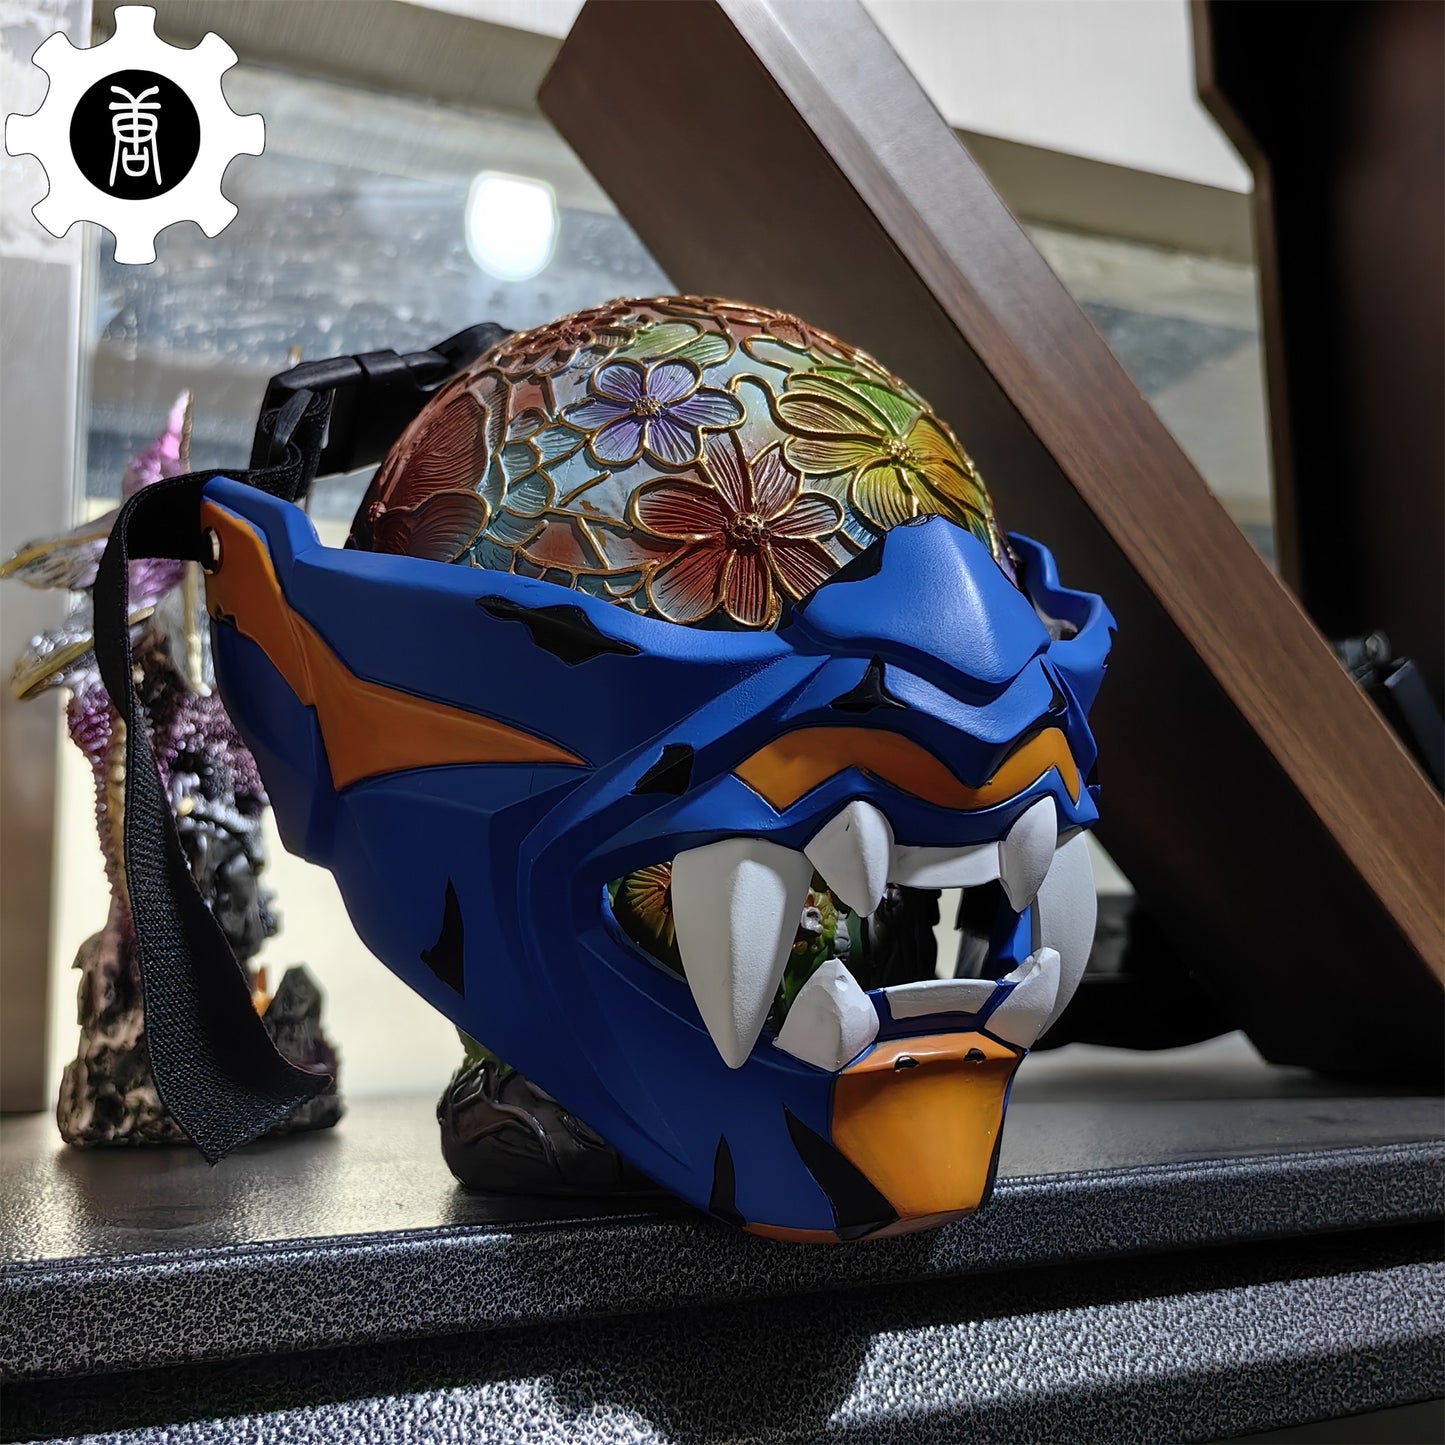 3D Printed Yoru Mask Duelist Half Face Mask Yoru Cosplay Prop